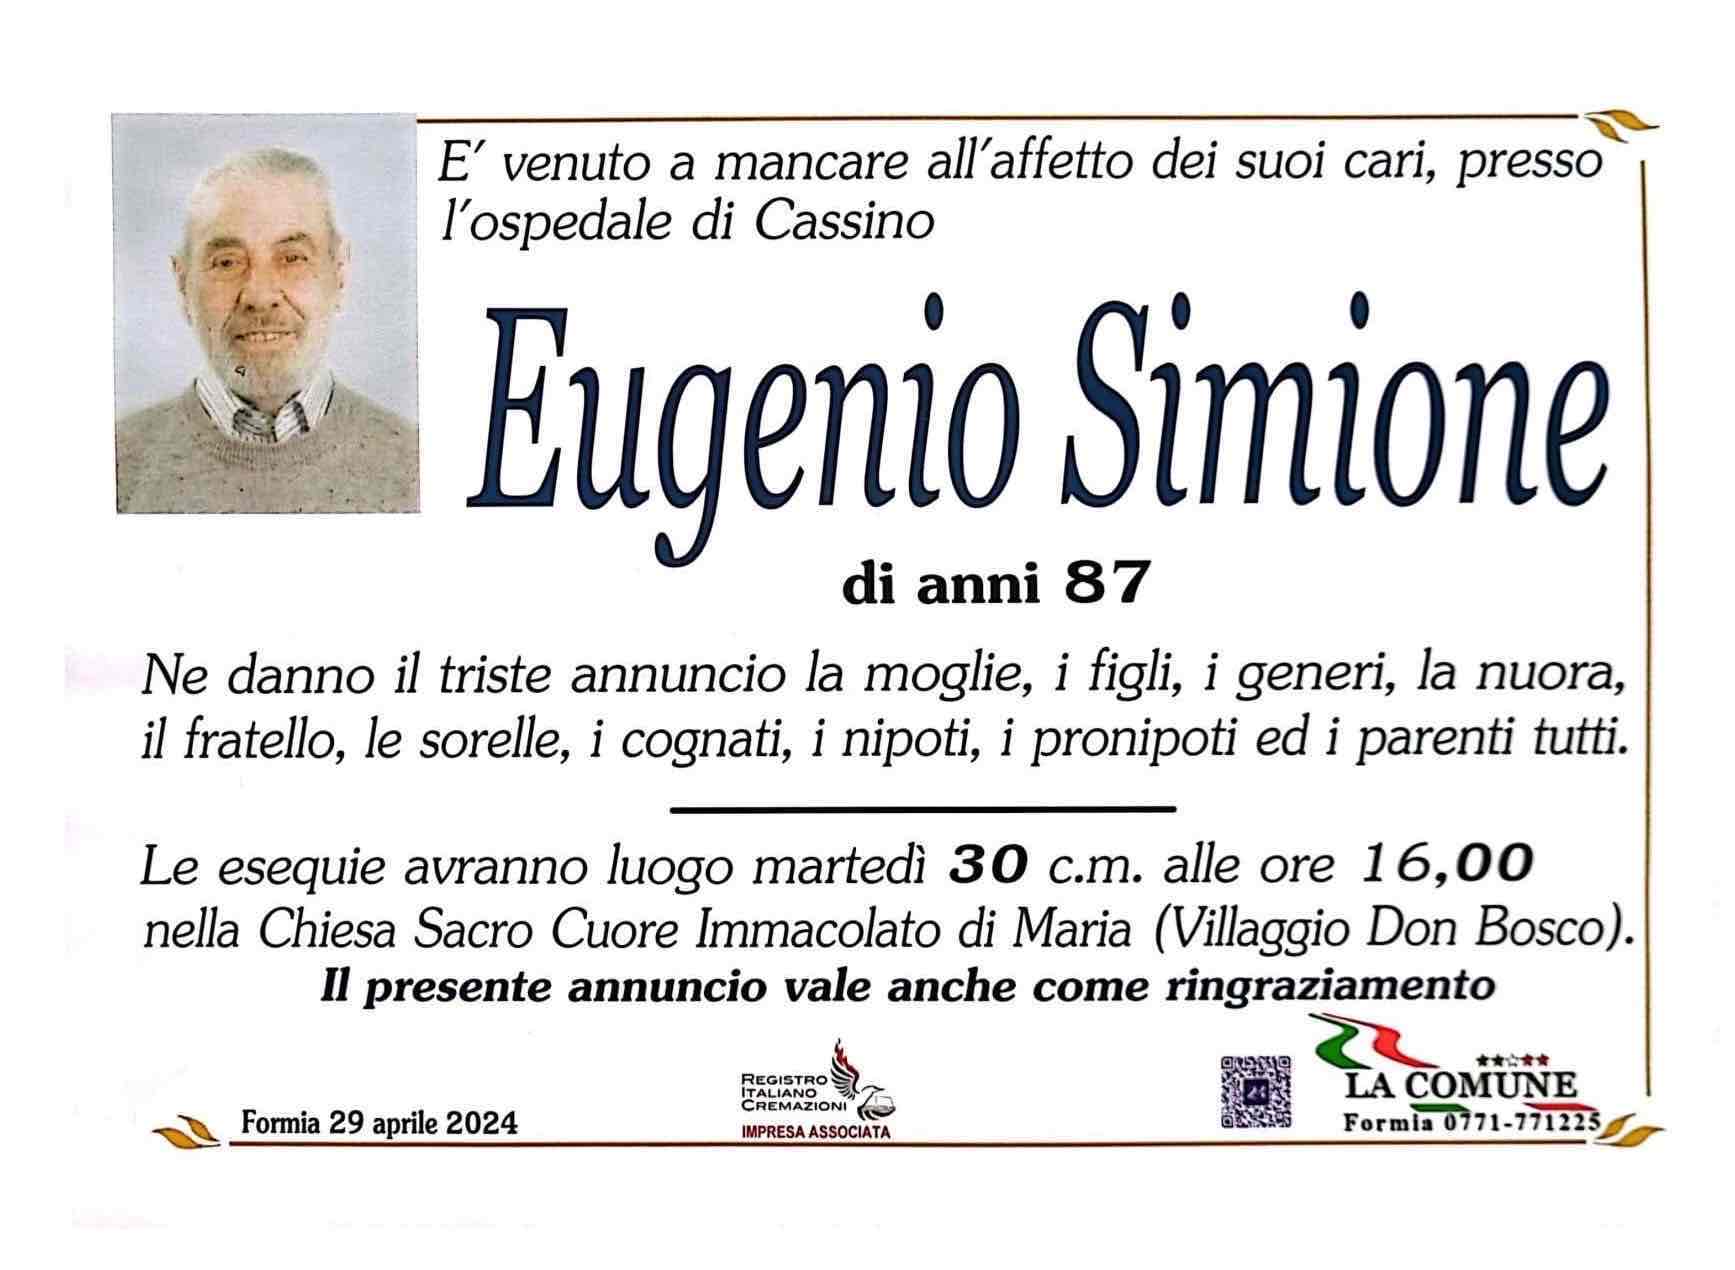 Eugenio Simeone